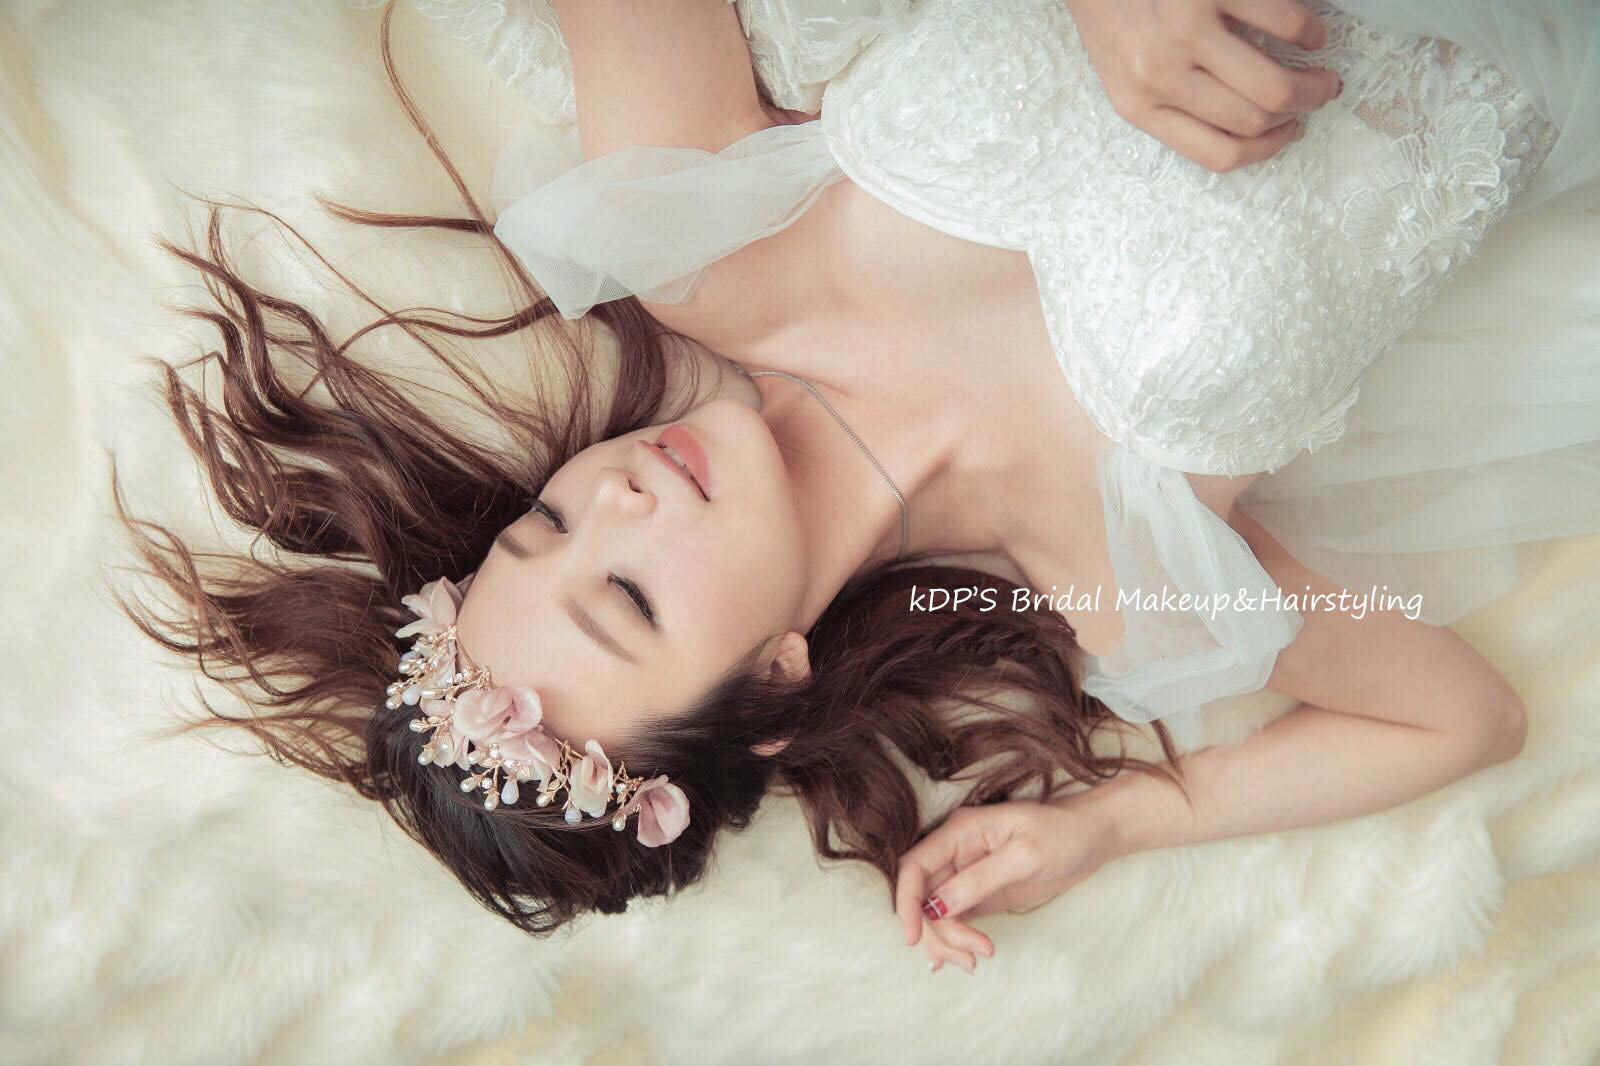 Phoebe Lai化妝師工作紀錄: 婚紗公司廣告造型